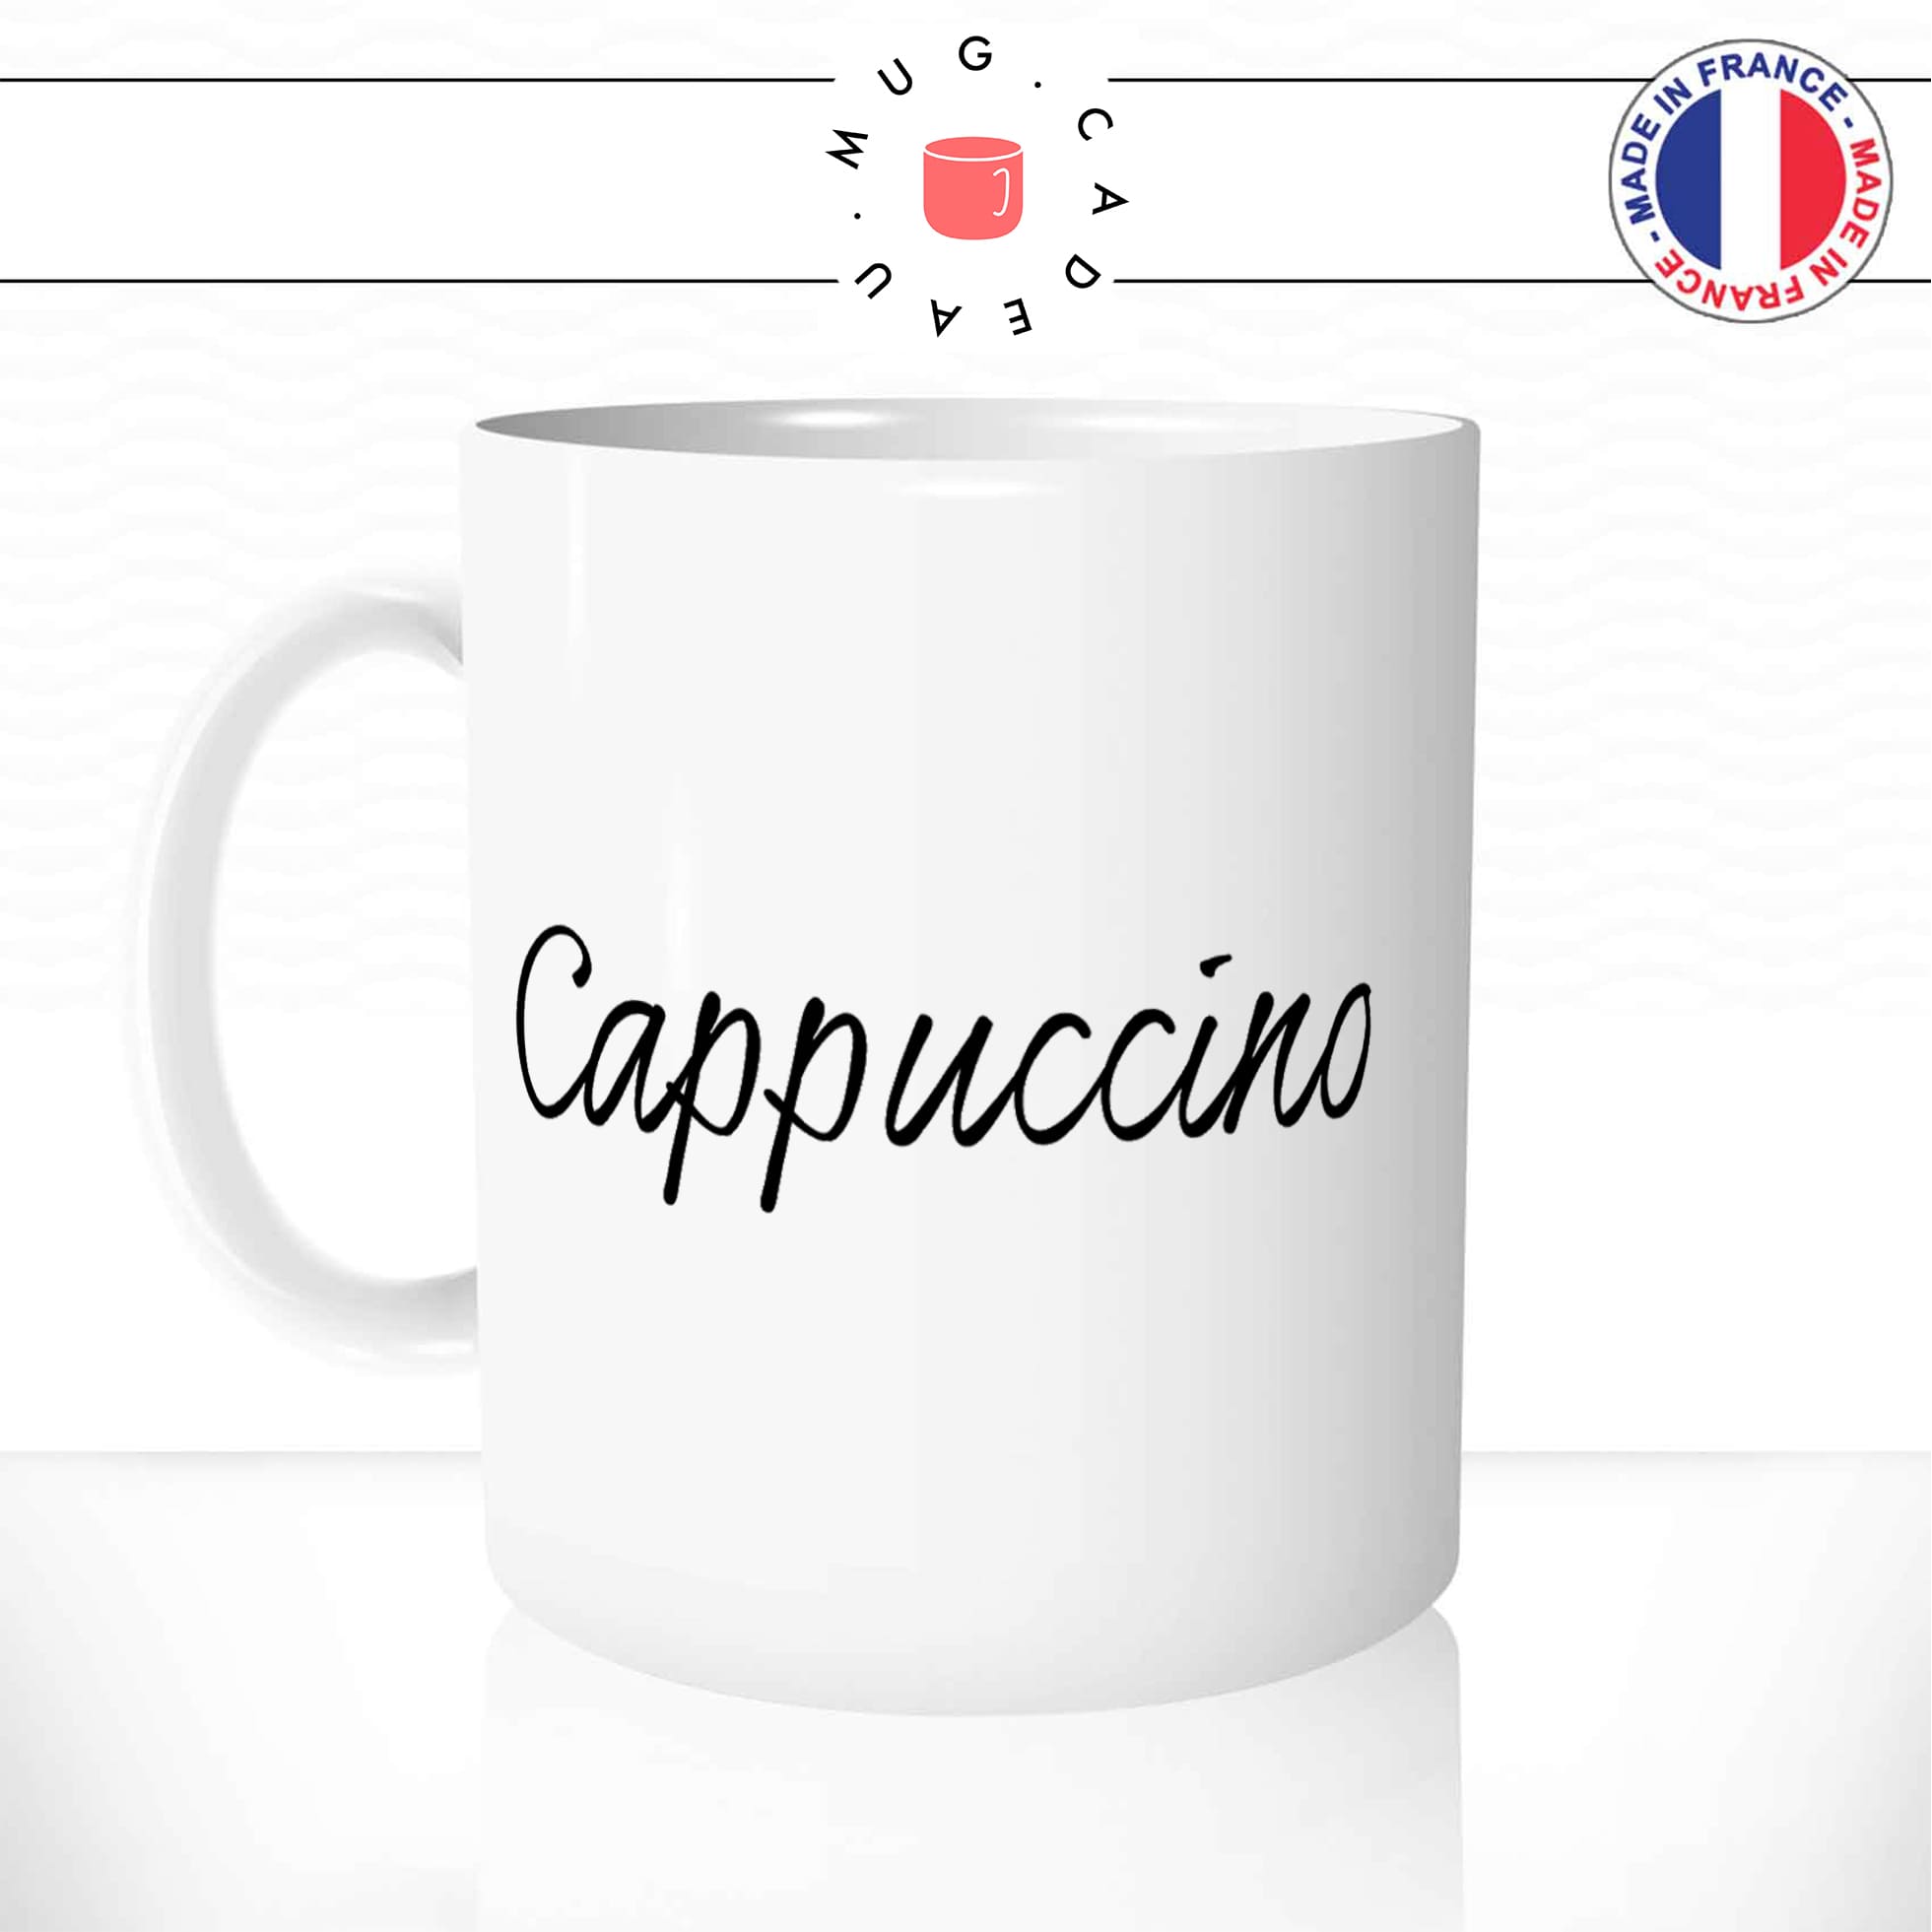 Mug Cappuccino